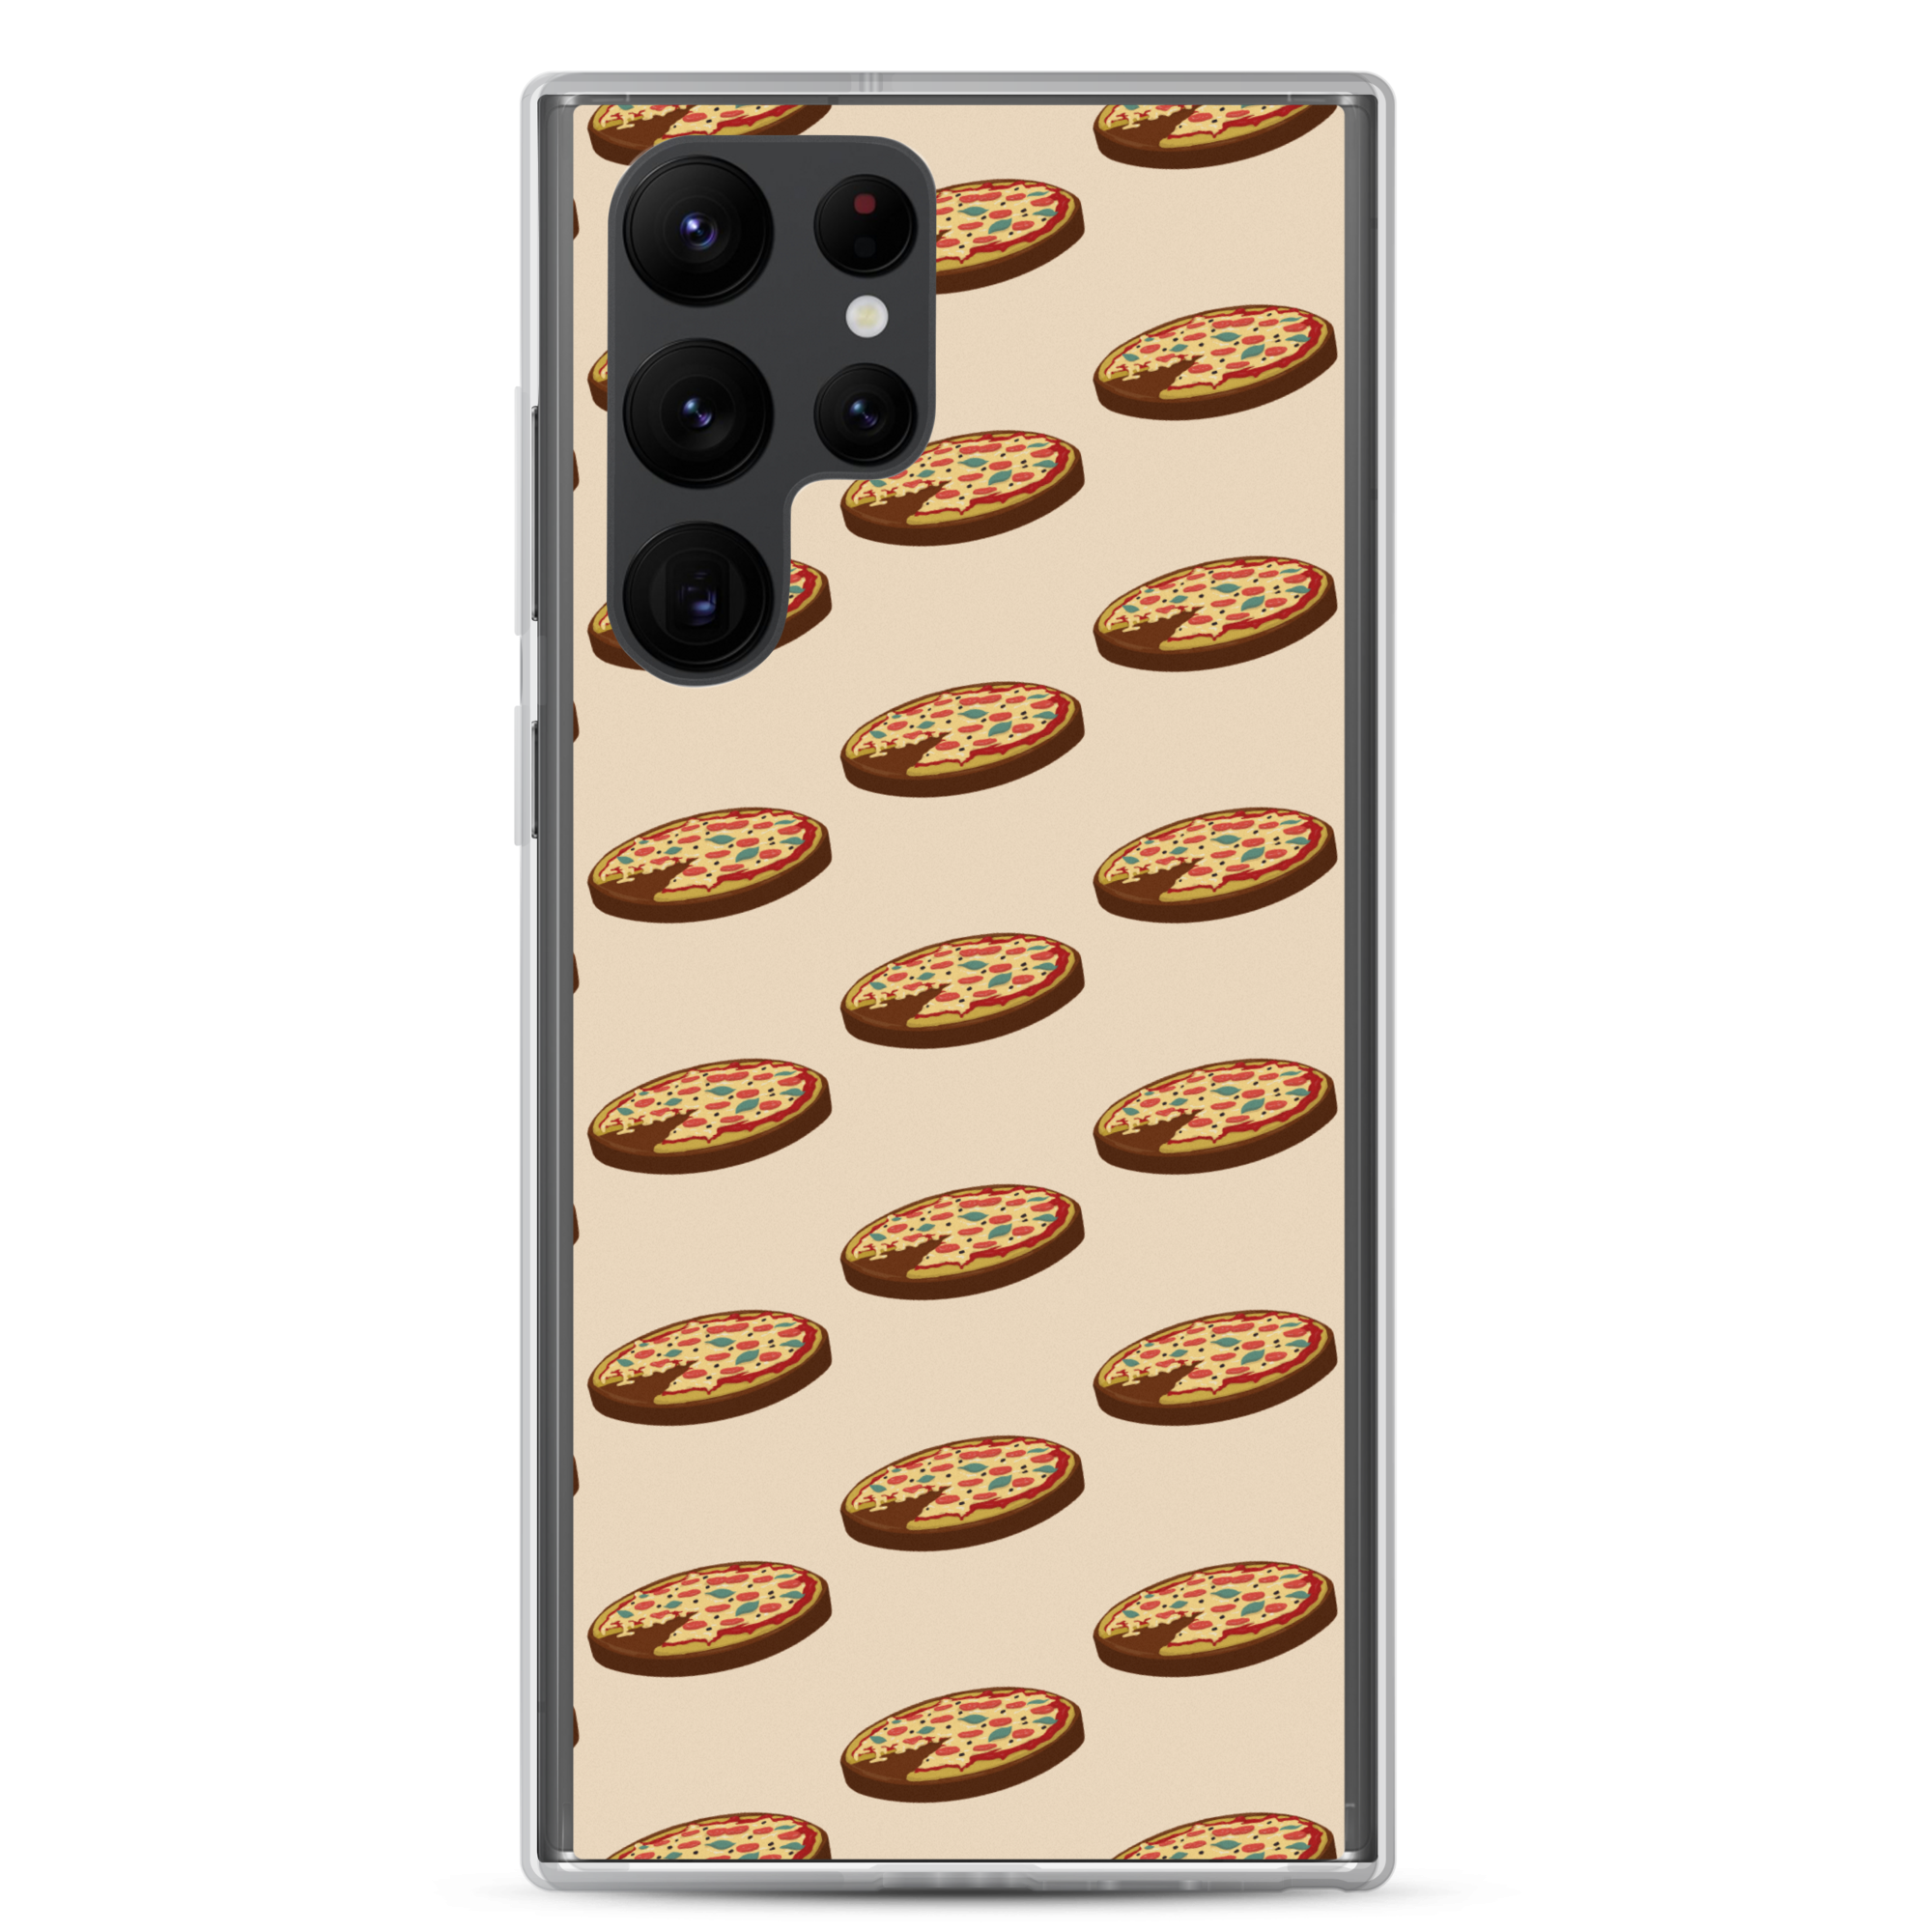 Carcasa transparente Samsung® Pizza Cool